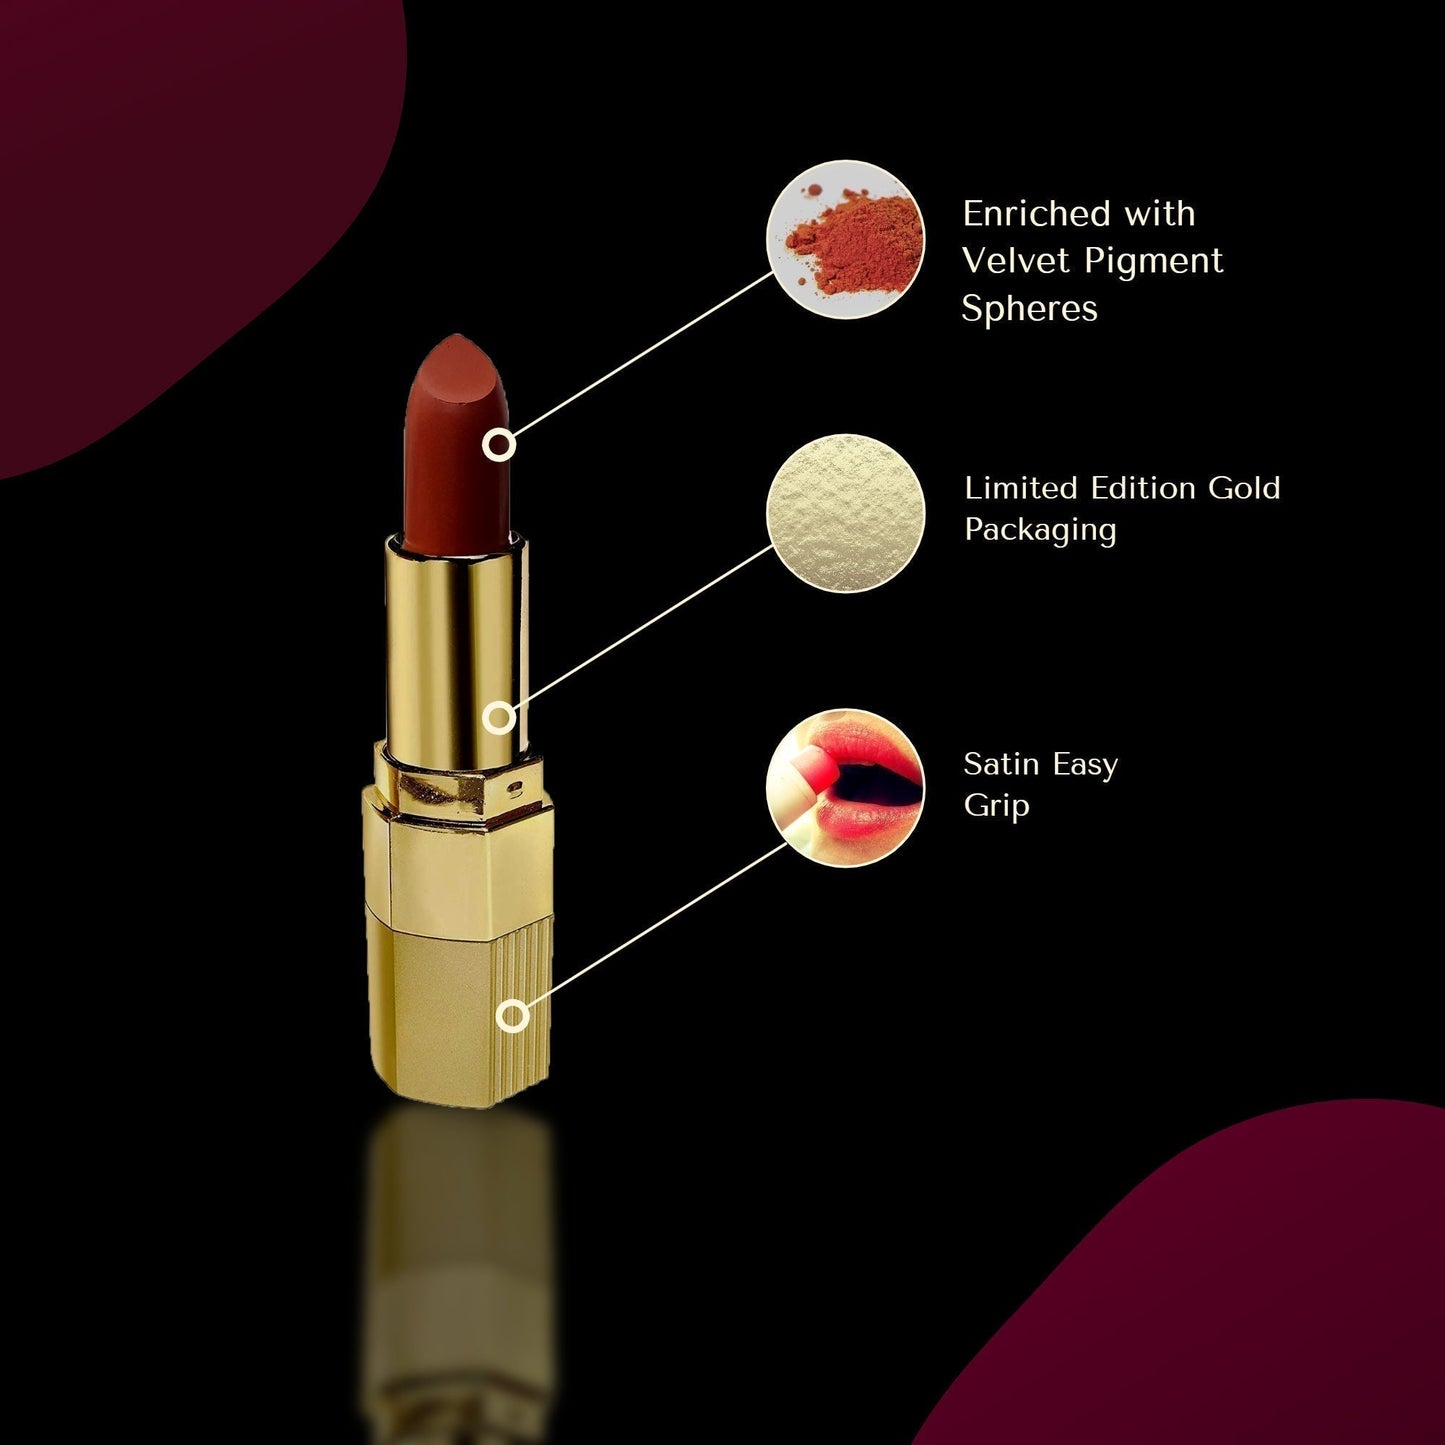 Krayons Desire Matte Lipstick, Highly Pigmented, Longlasting, 3.5g Each, Combo, Pack of 3 (Caramel Brown, Scarlet Red, Garnet Red)